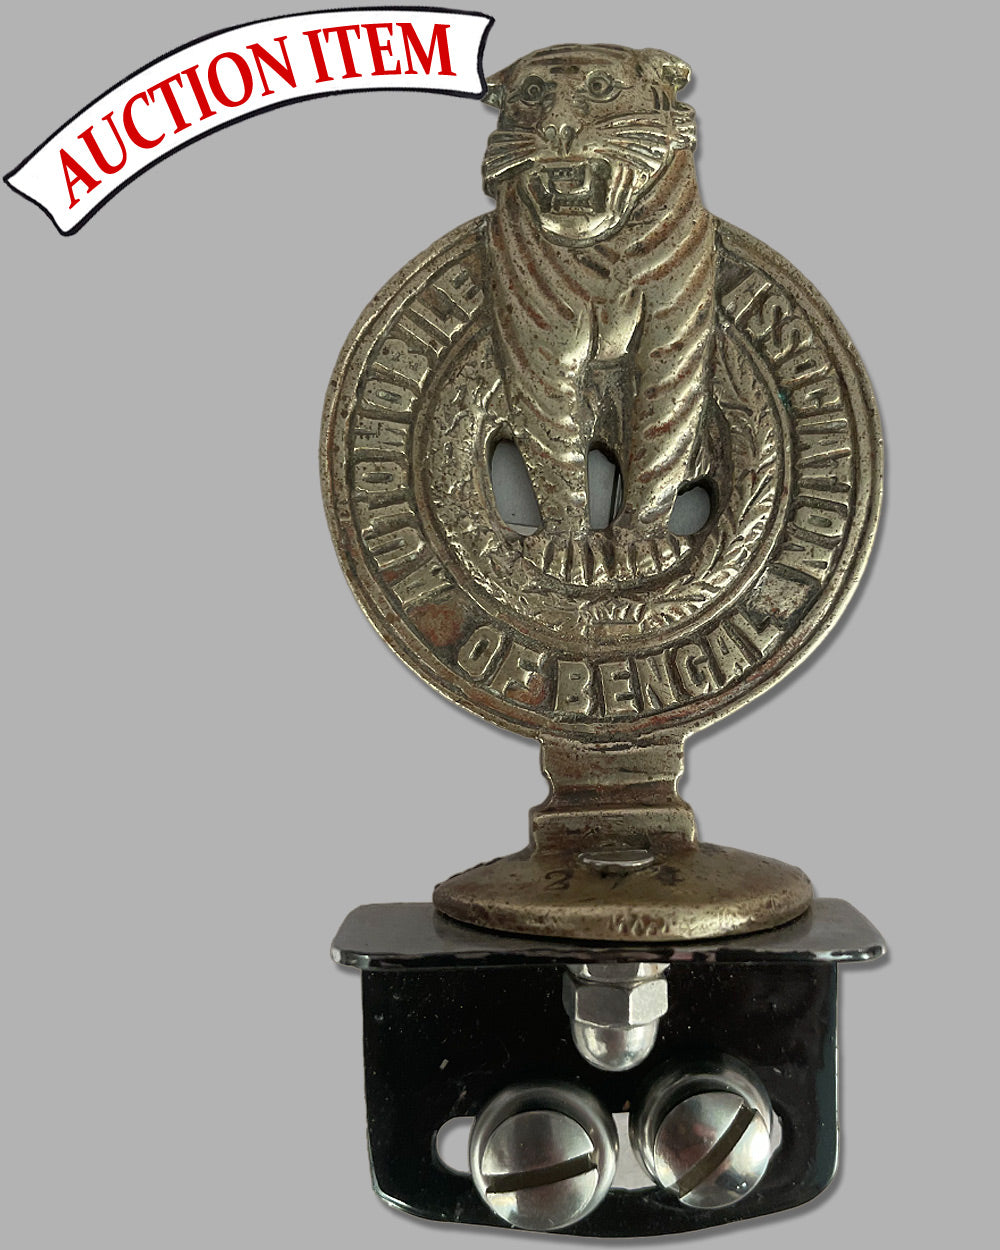 Automobile Association of Bengal bumper badge, 1930’s